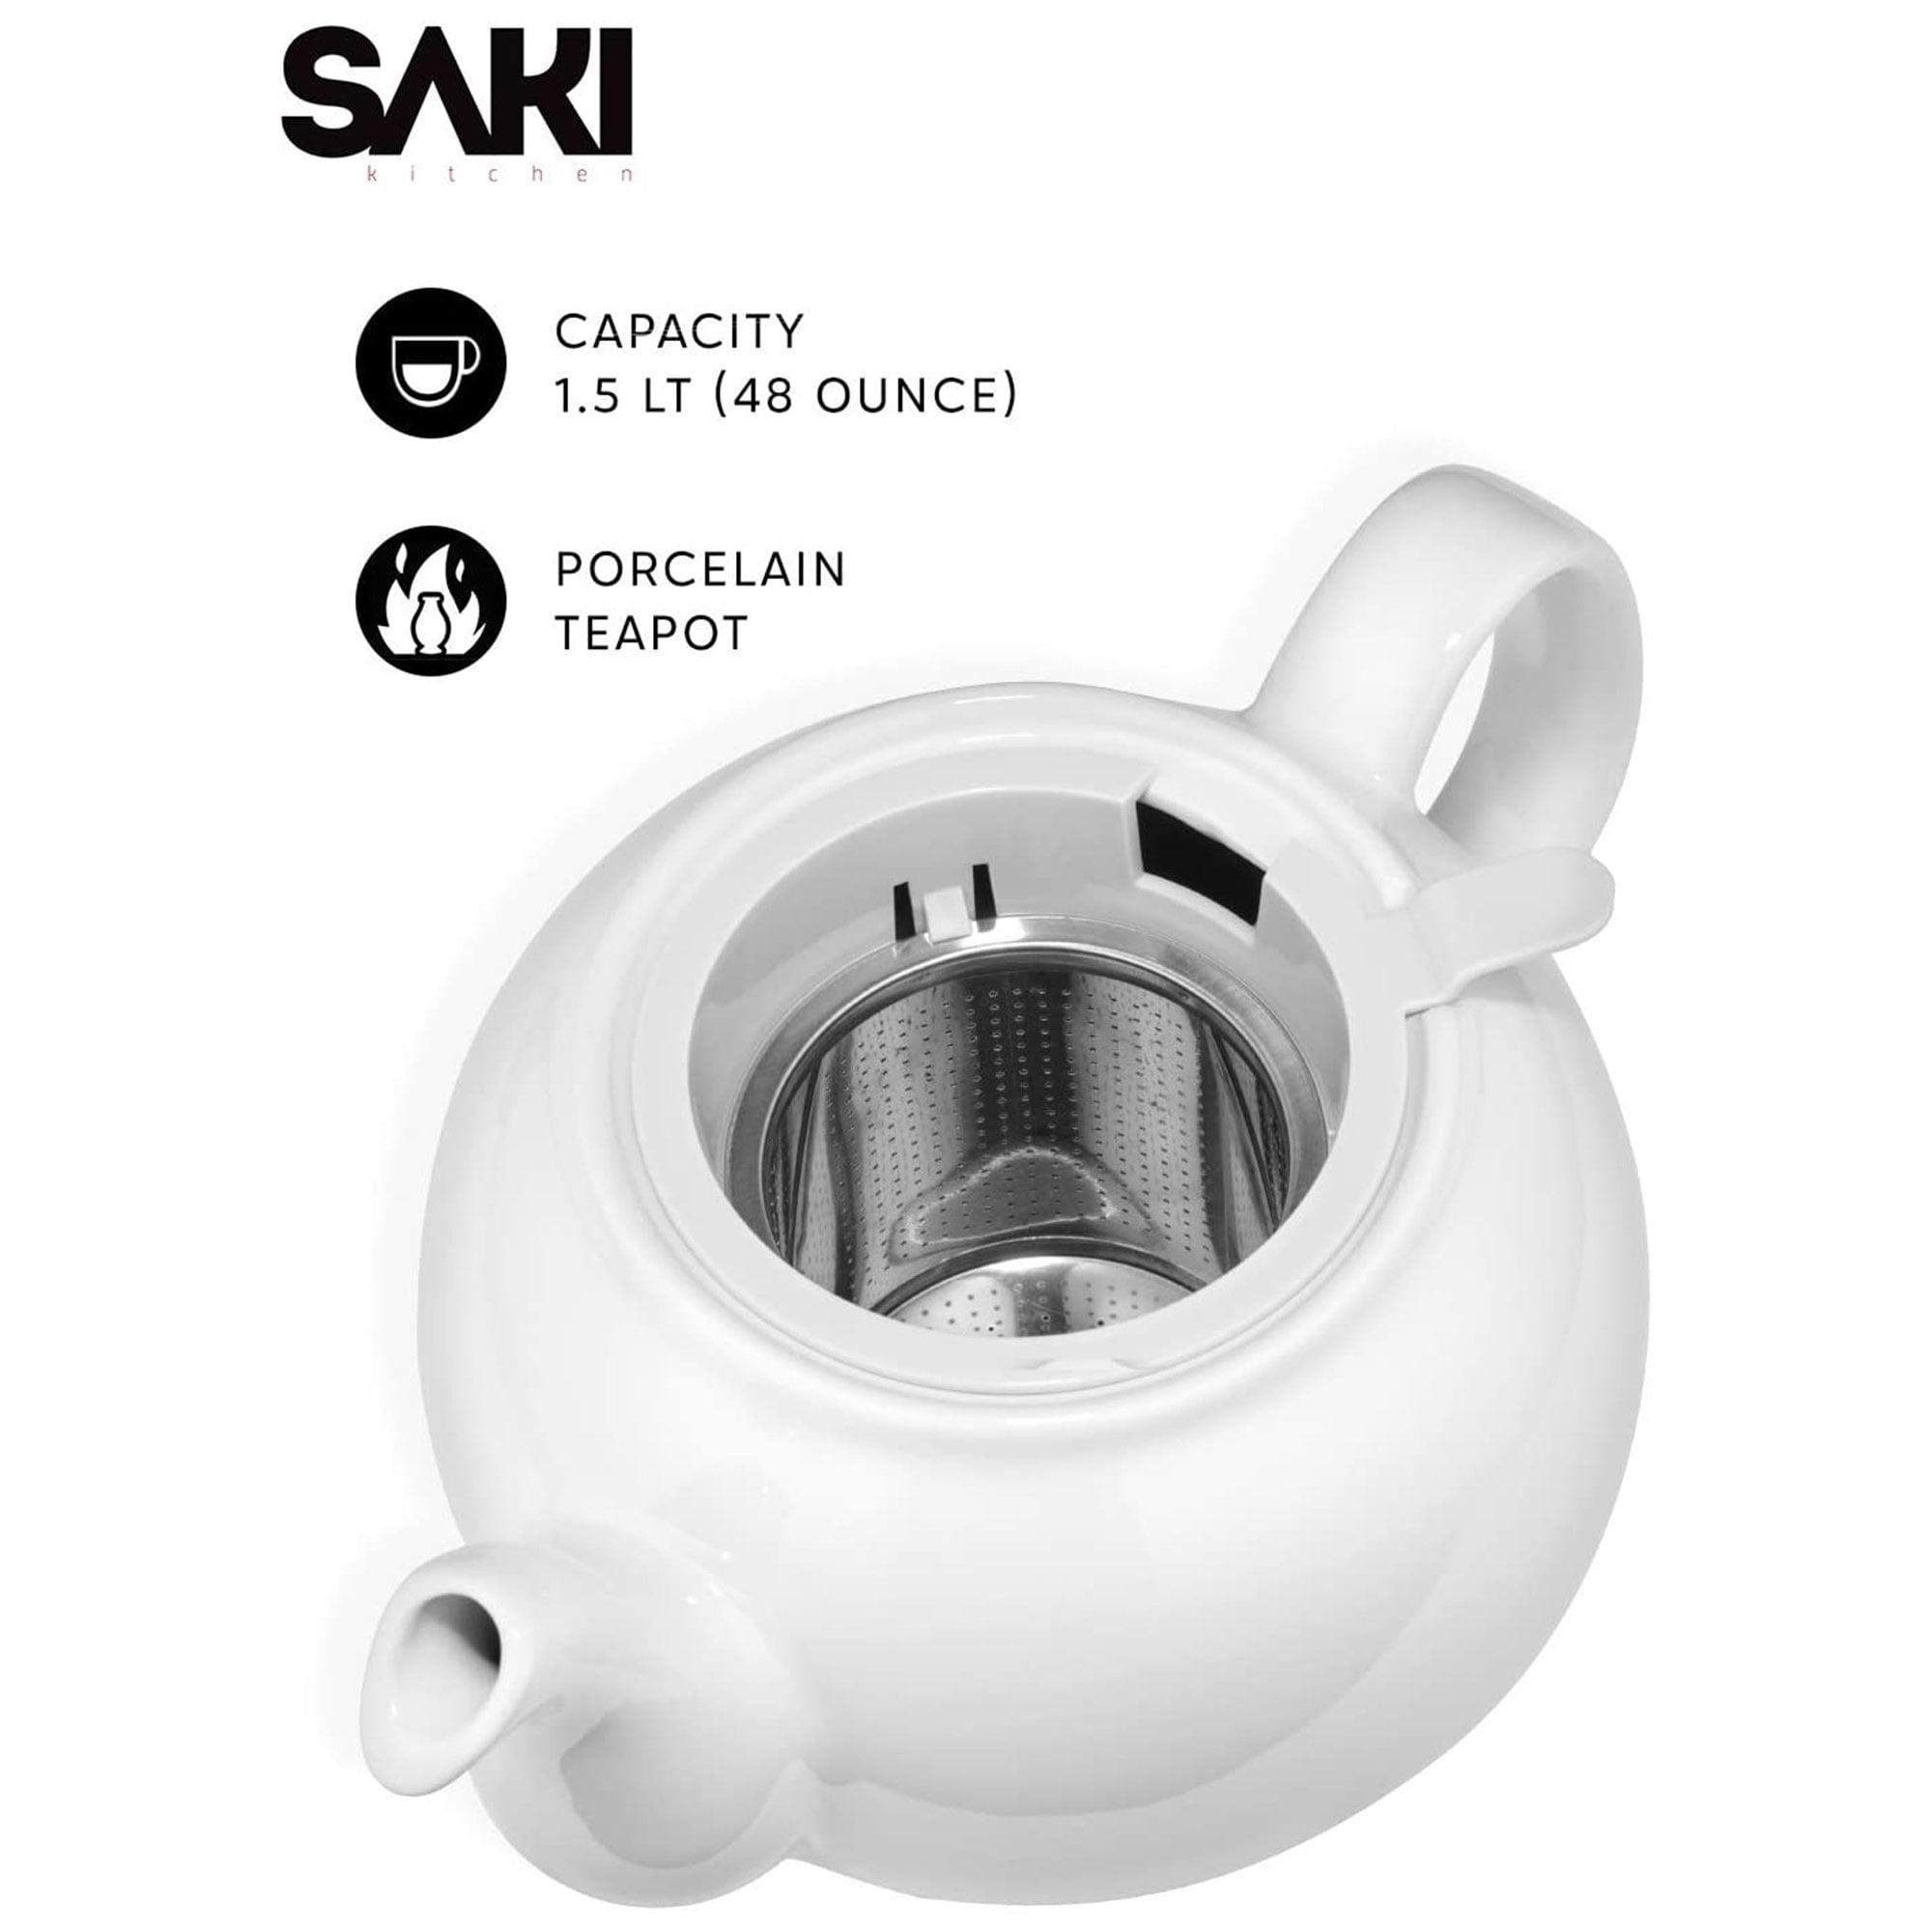 SAKI 95-DY94-6MWM Electric Samovar Stainless Steel Turkish Tea Maker, White  